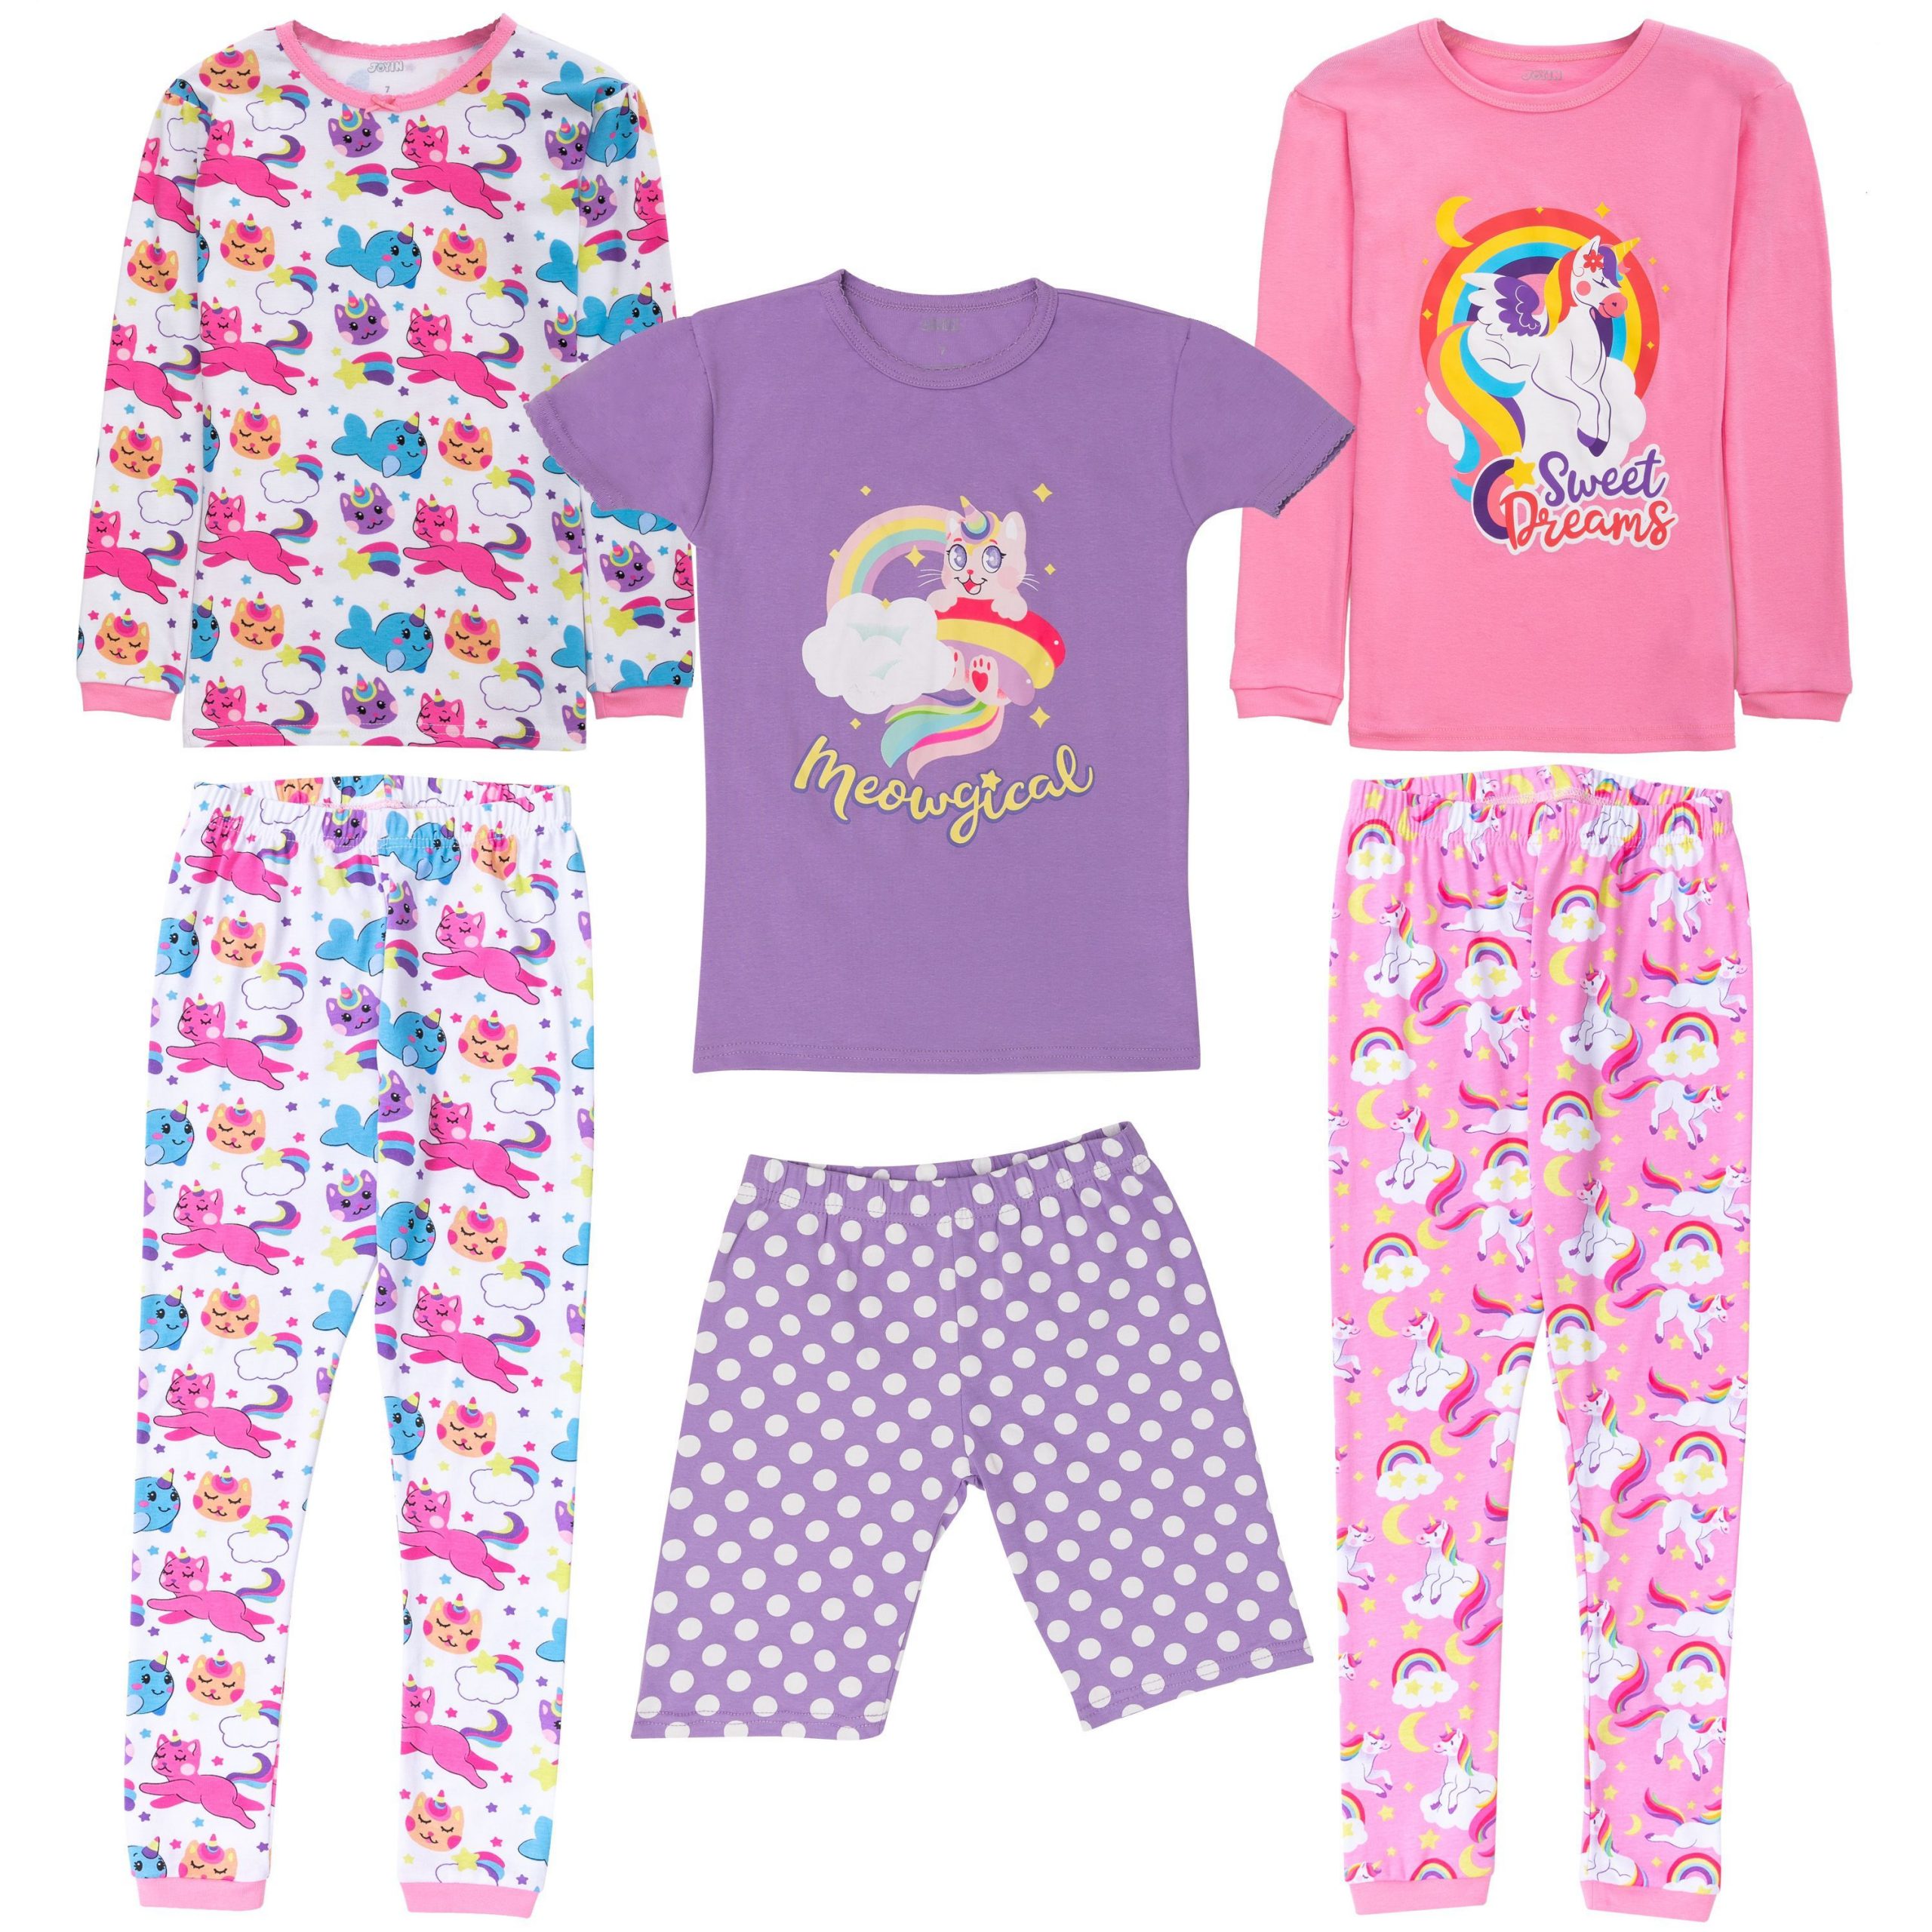 Girls Unicorn Pajama Set - One Stop Shop for All Celebration